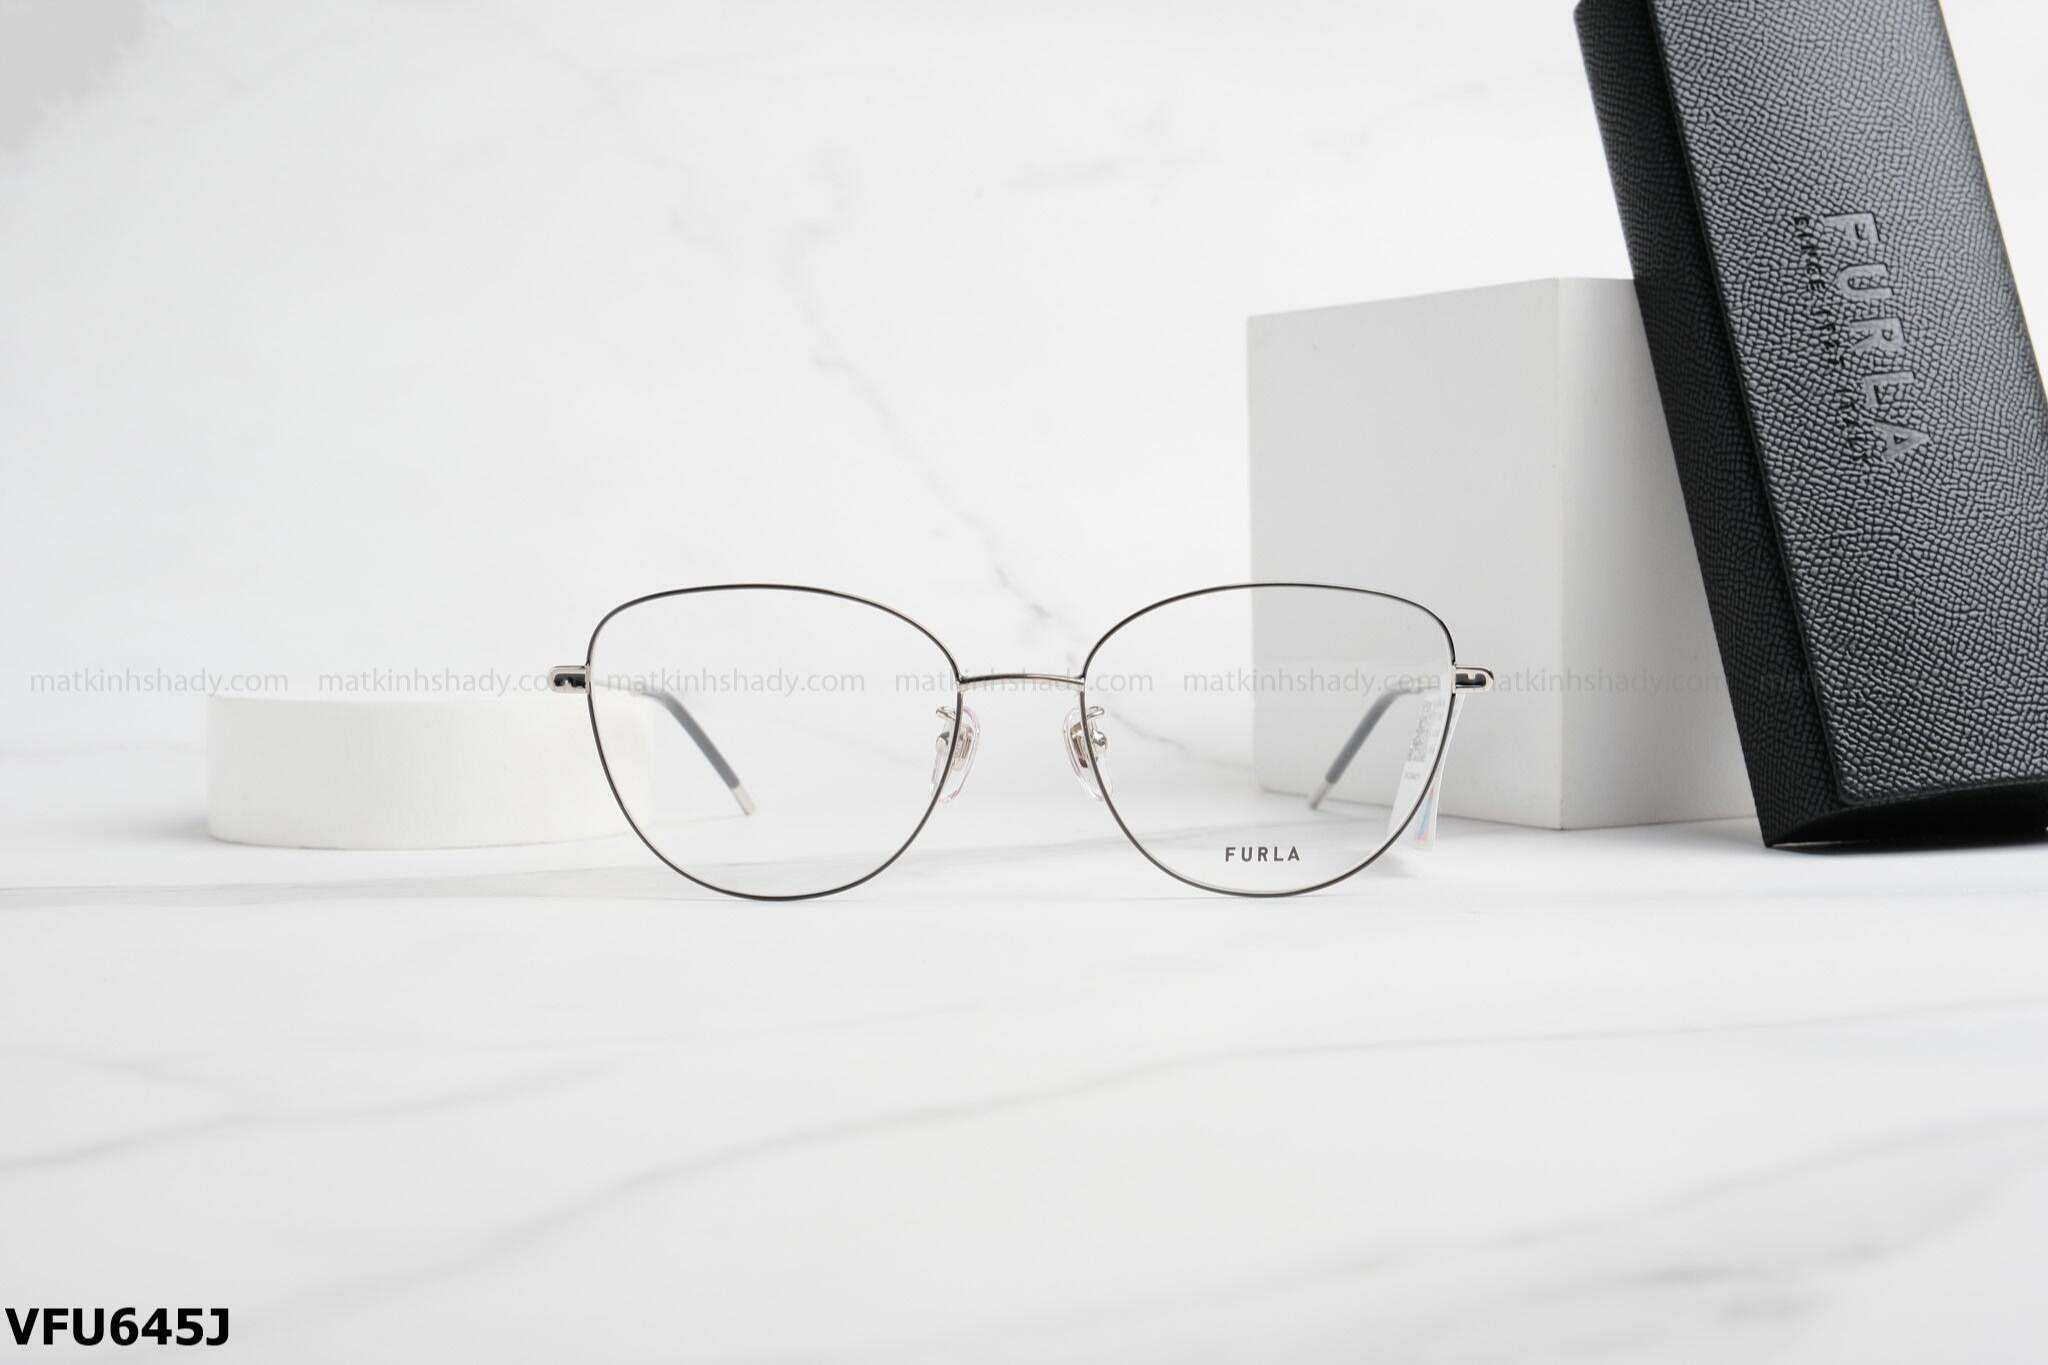  Furla Eyewear - Glasses - VFU645J 